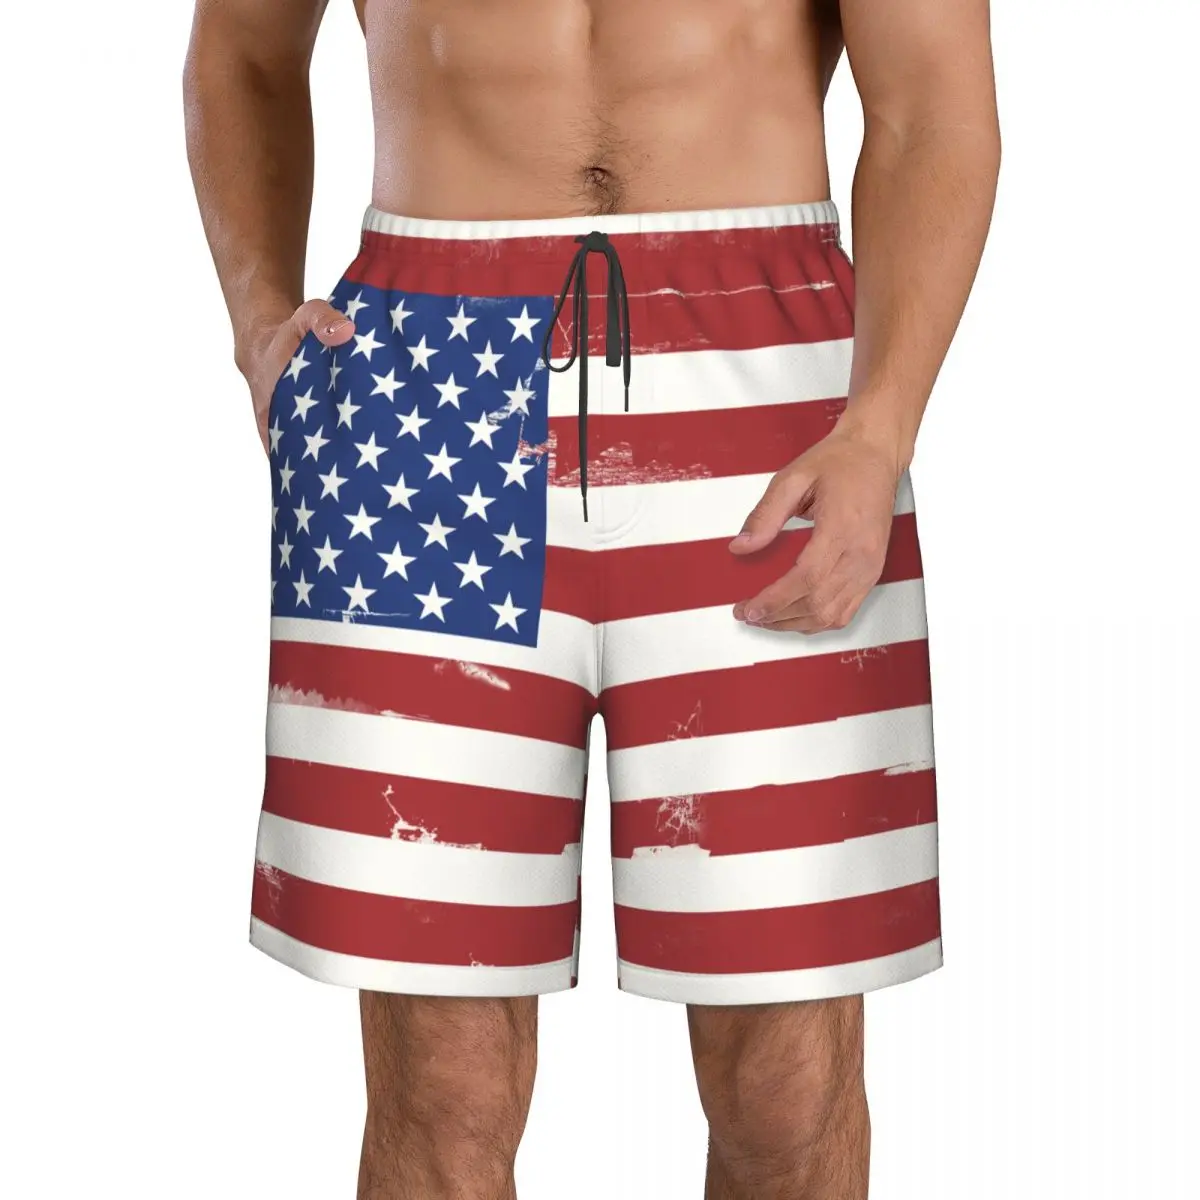 Men's Swim Shorts Summer Swimwear Man Swimsuit Swimming Trunks Beach Shorts Surf Board Male Clothing Pants Worn American Flag